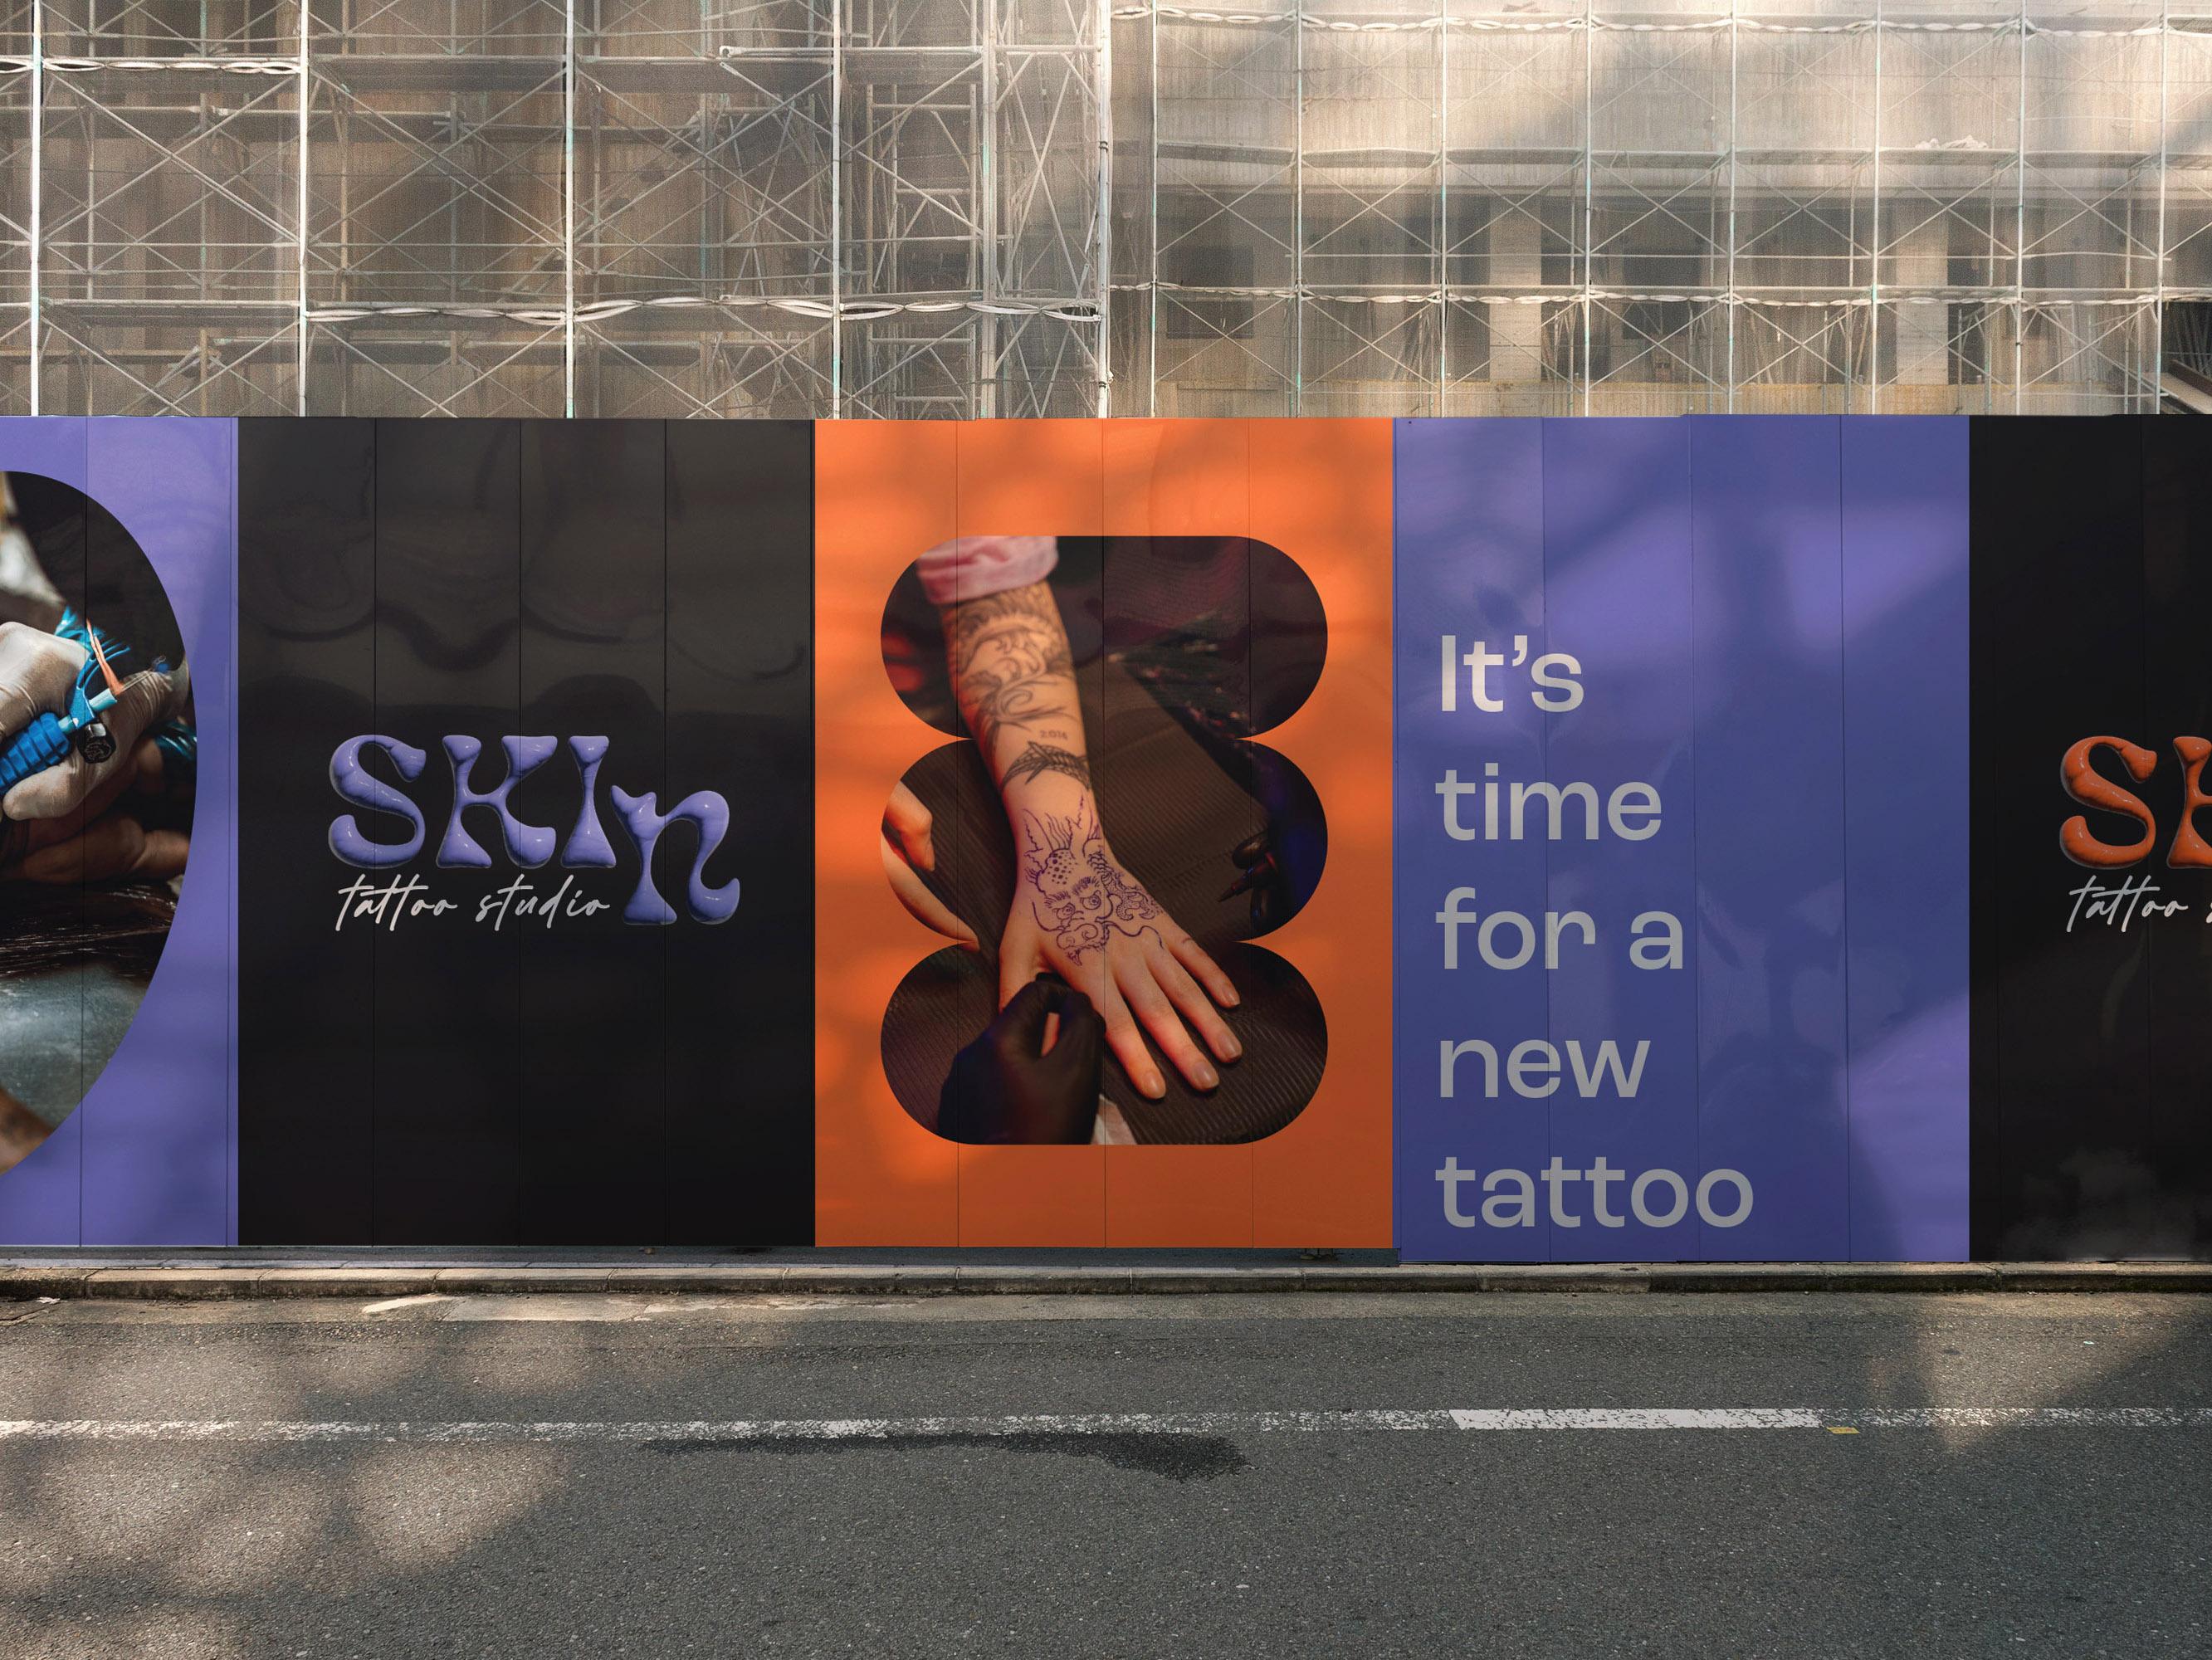 Skin Tattoo Studio – Visuell identitet